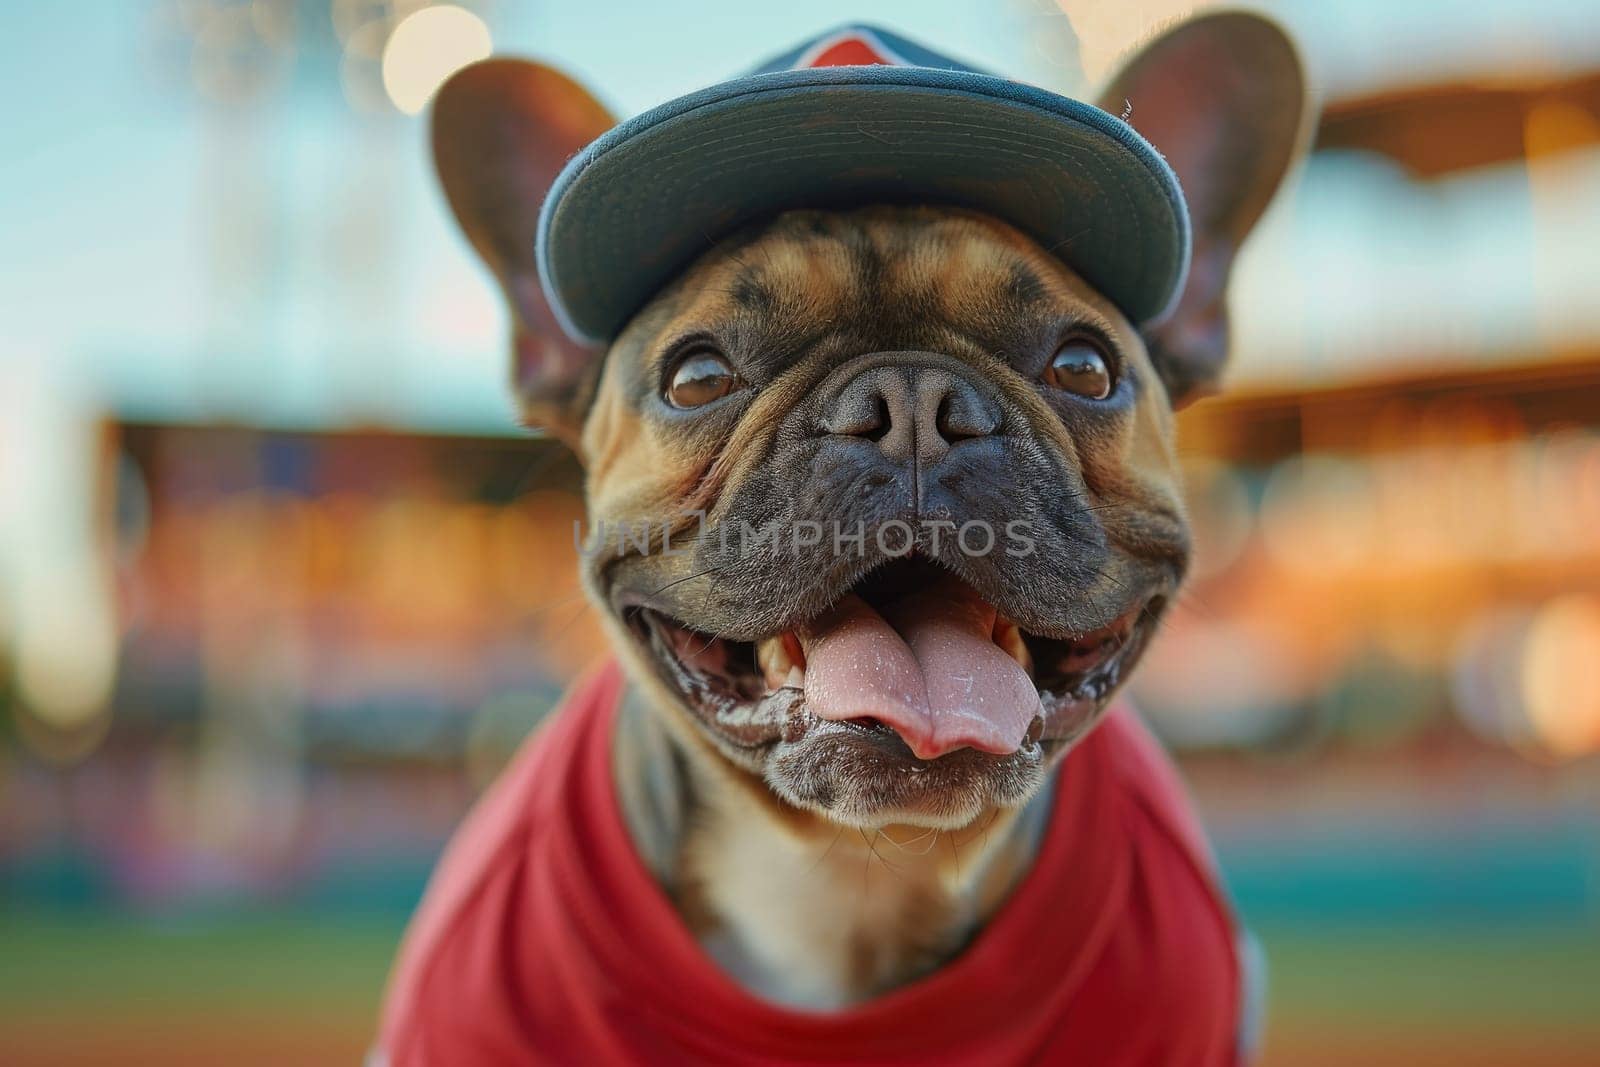 Dog playing and wearing a baseball.